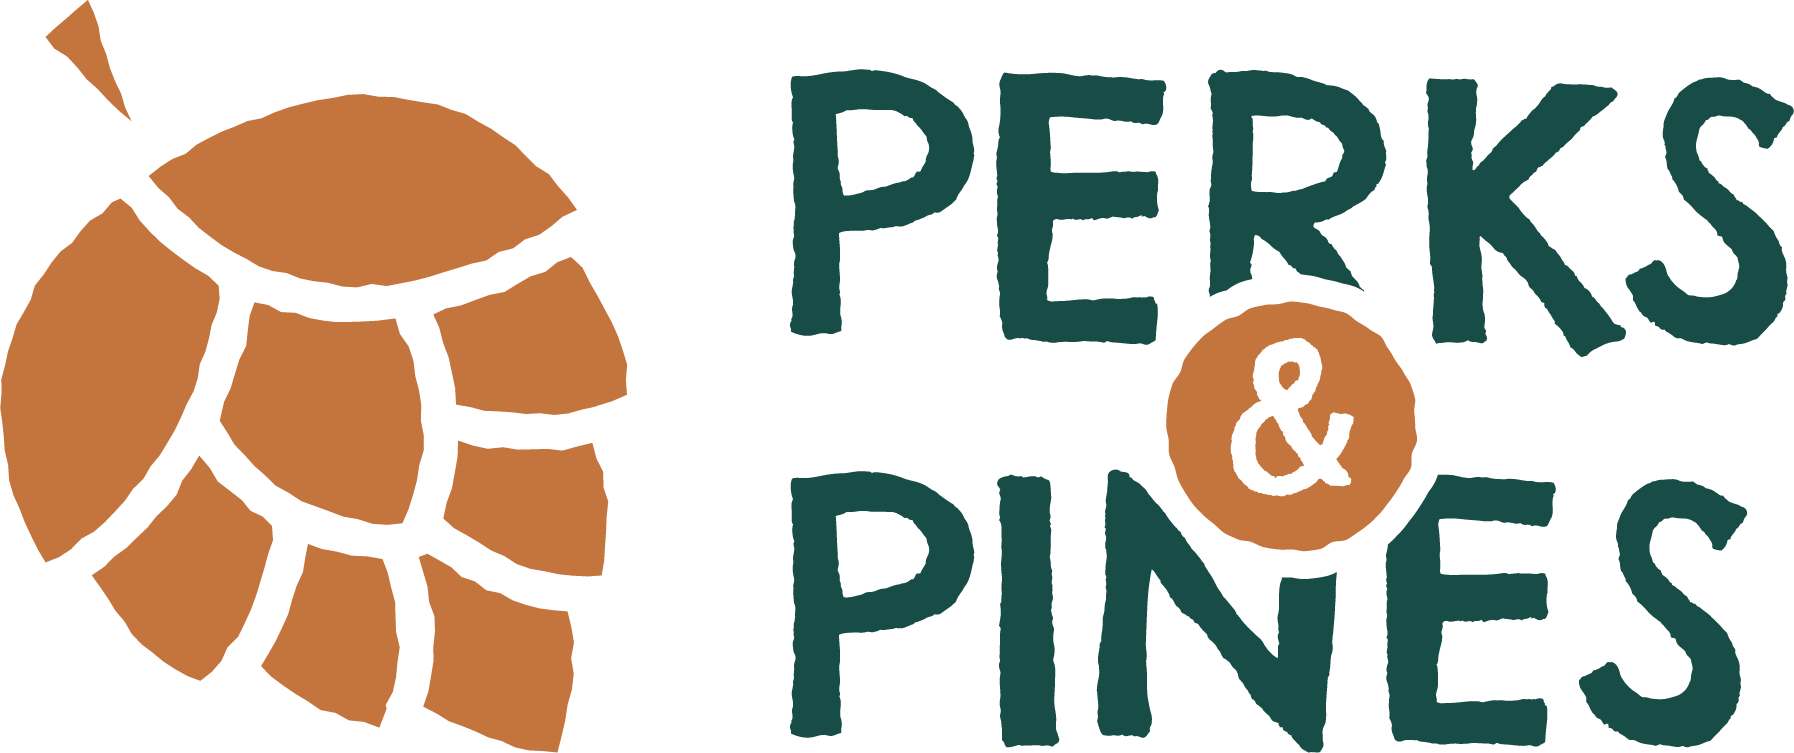 Perks & Pines